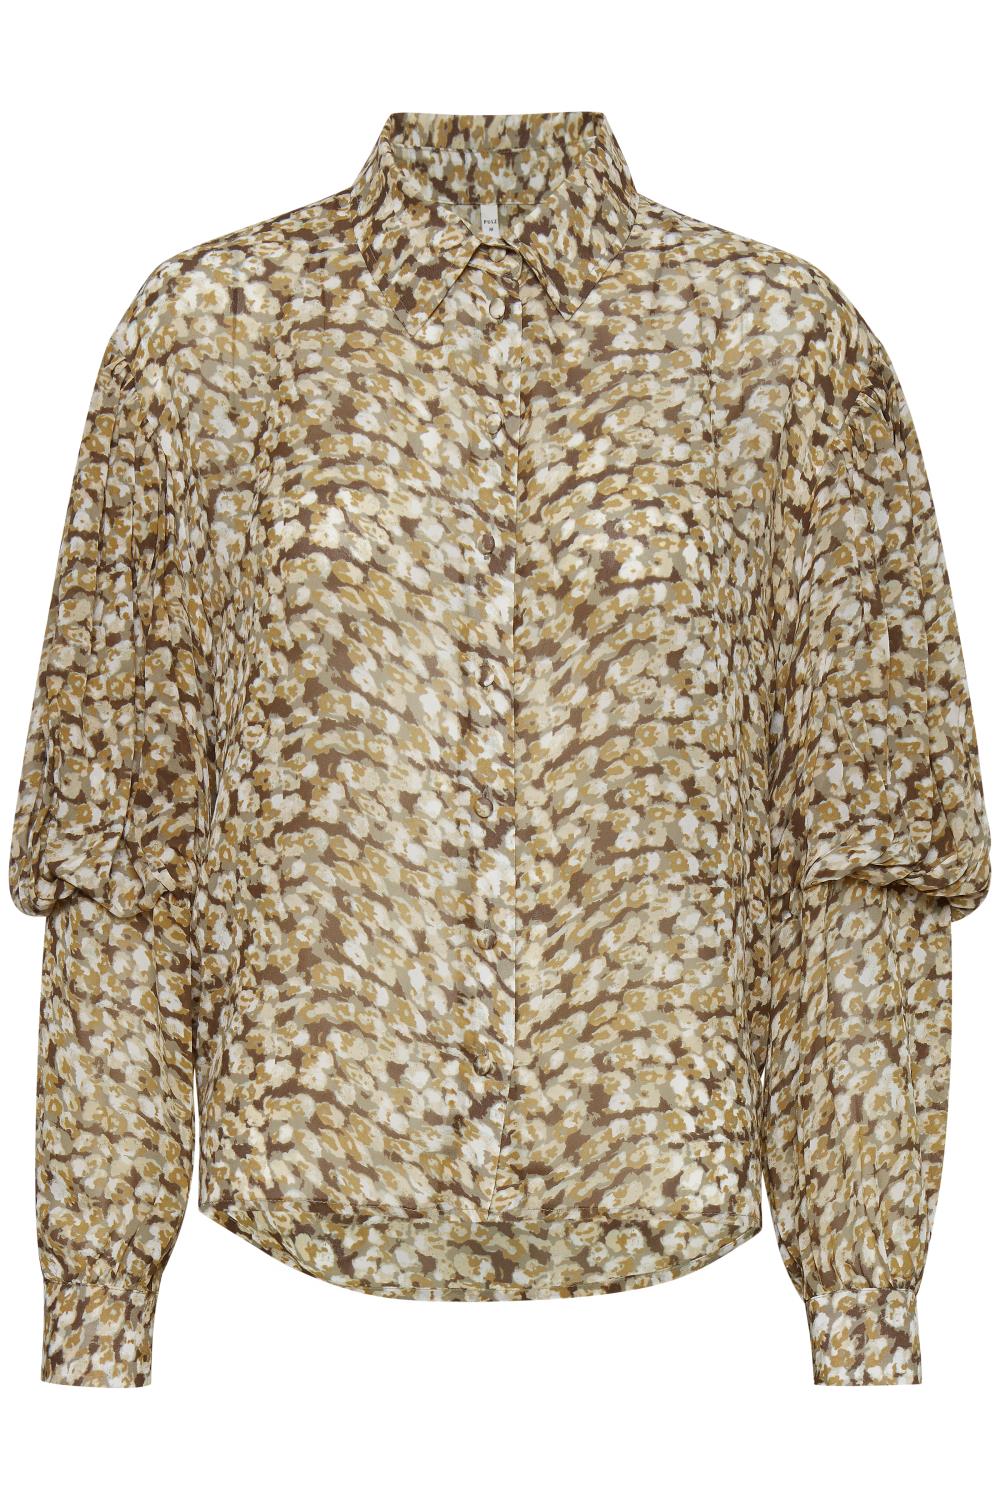 Pulz Cornelia Shirt, mønstret med puff ermer